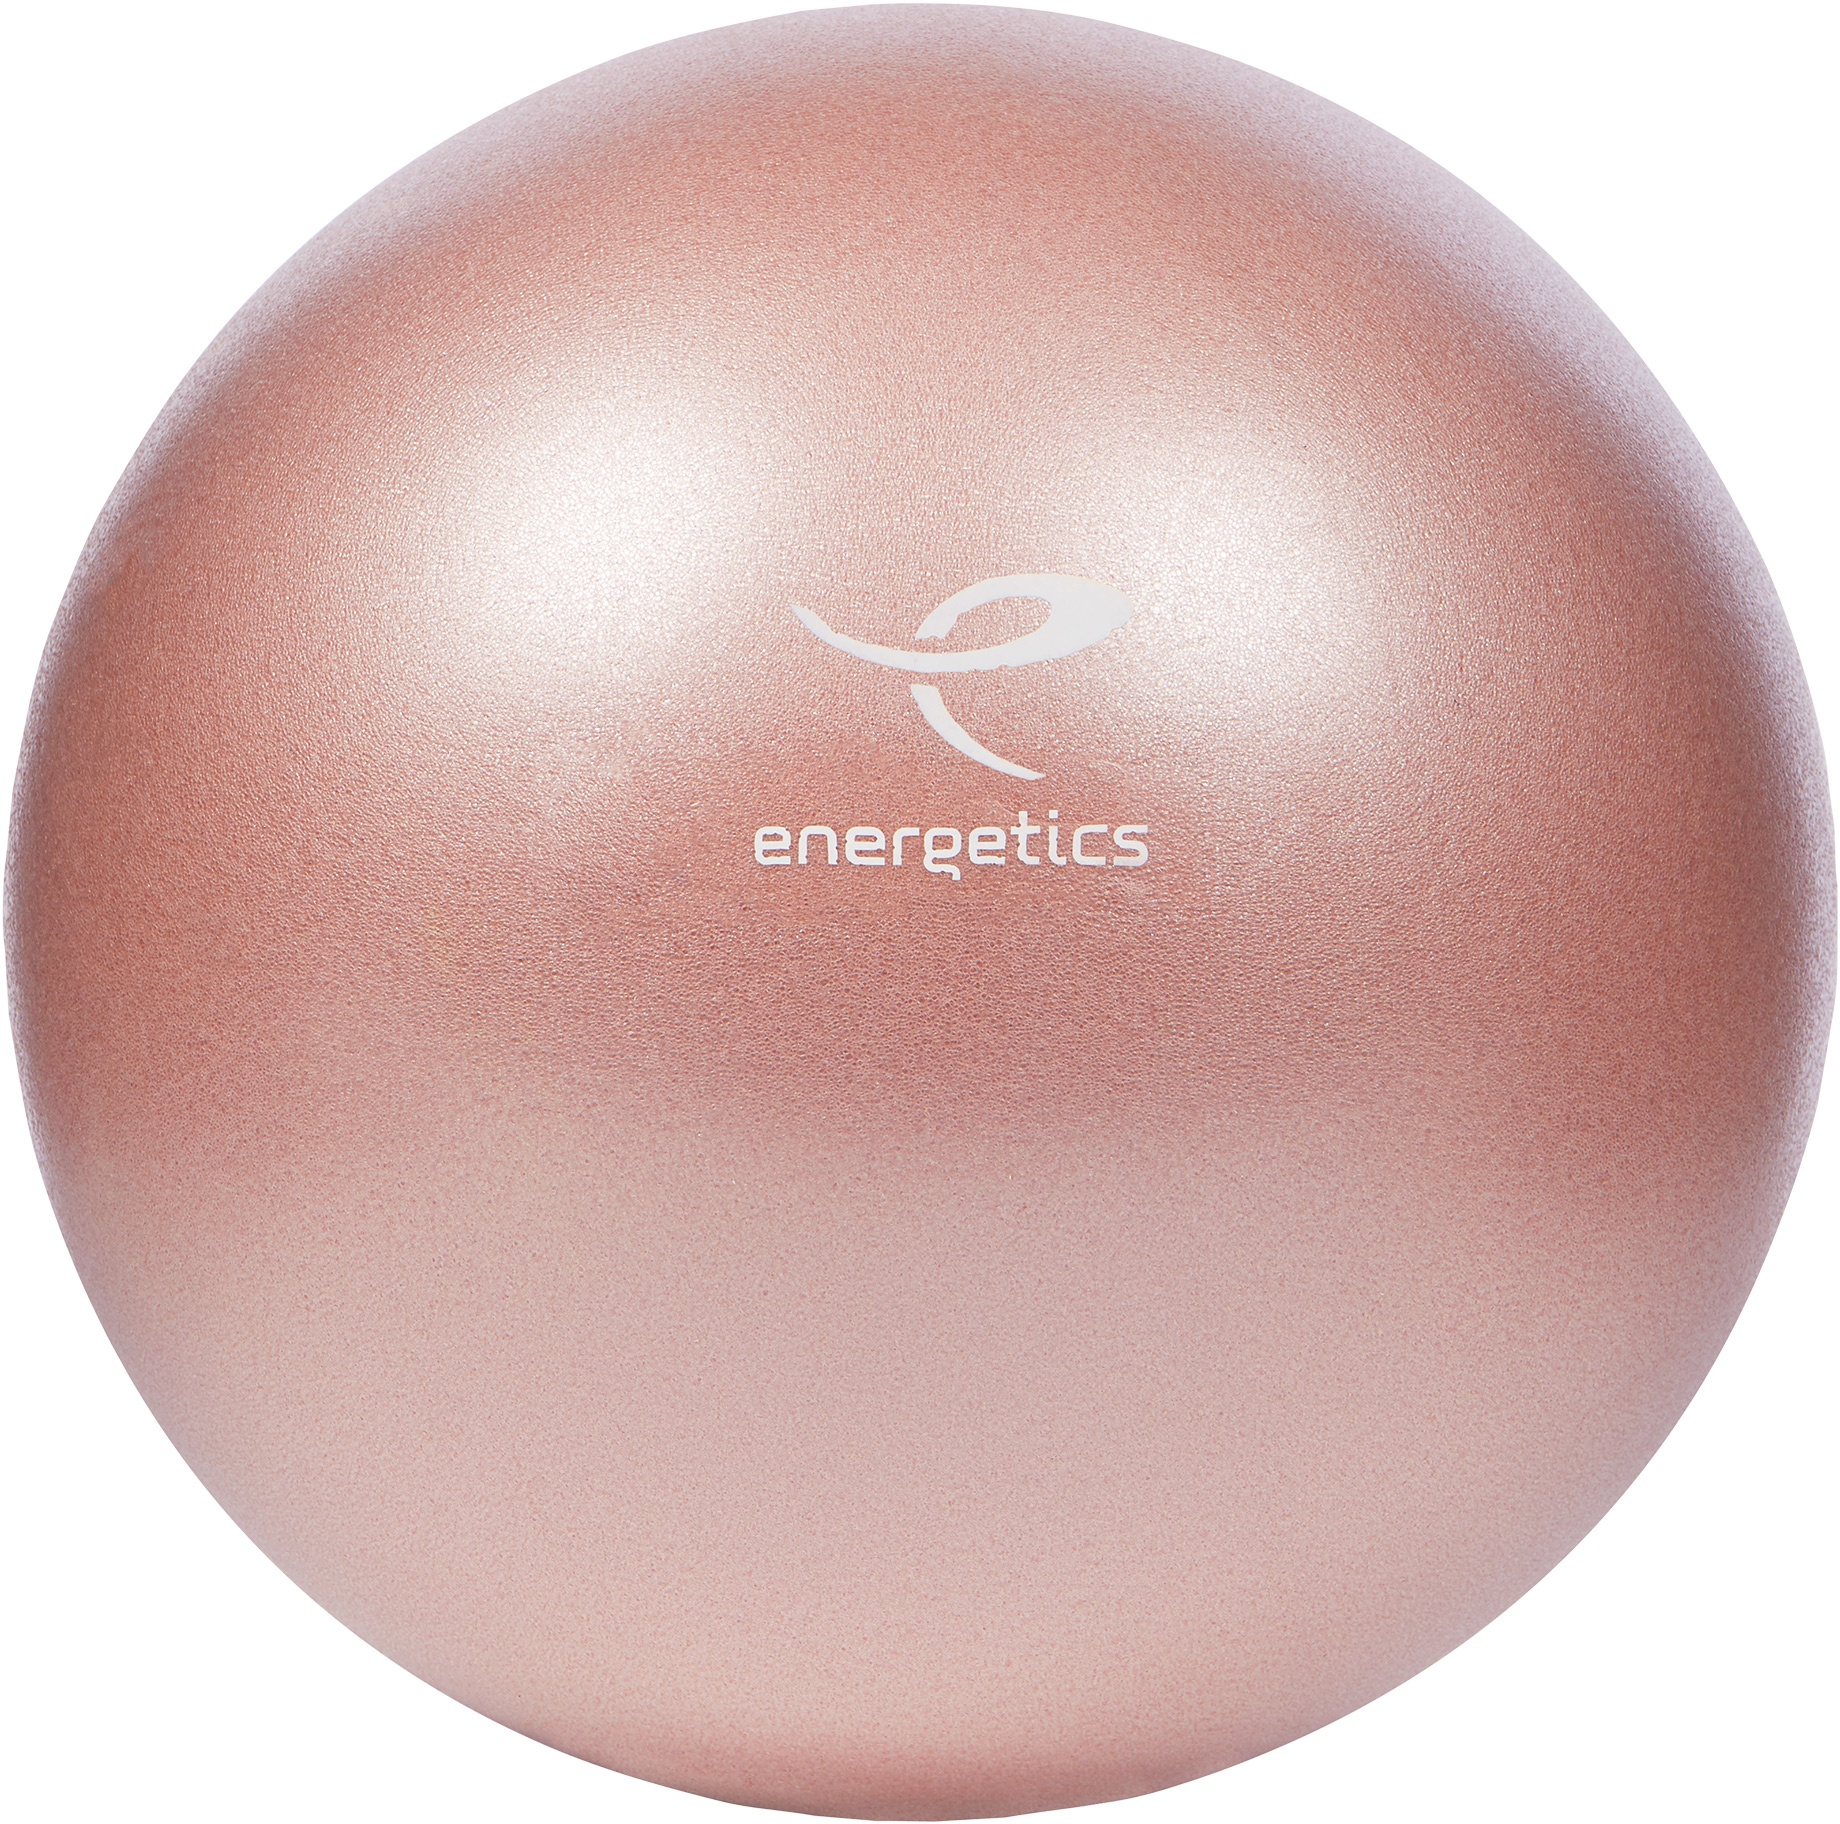 Energetics Pilates-Ball - rose - 22